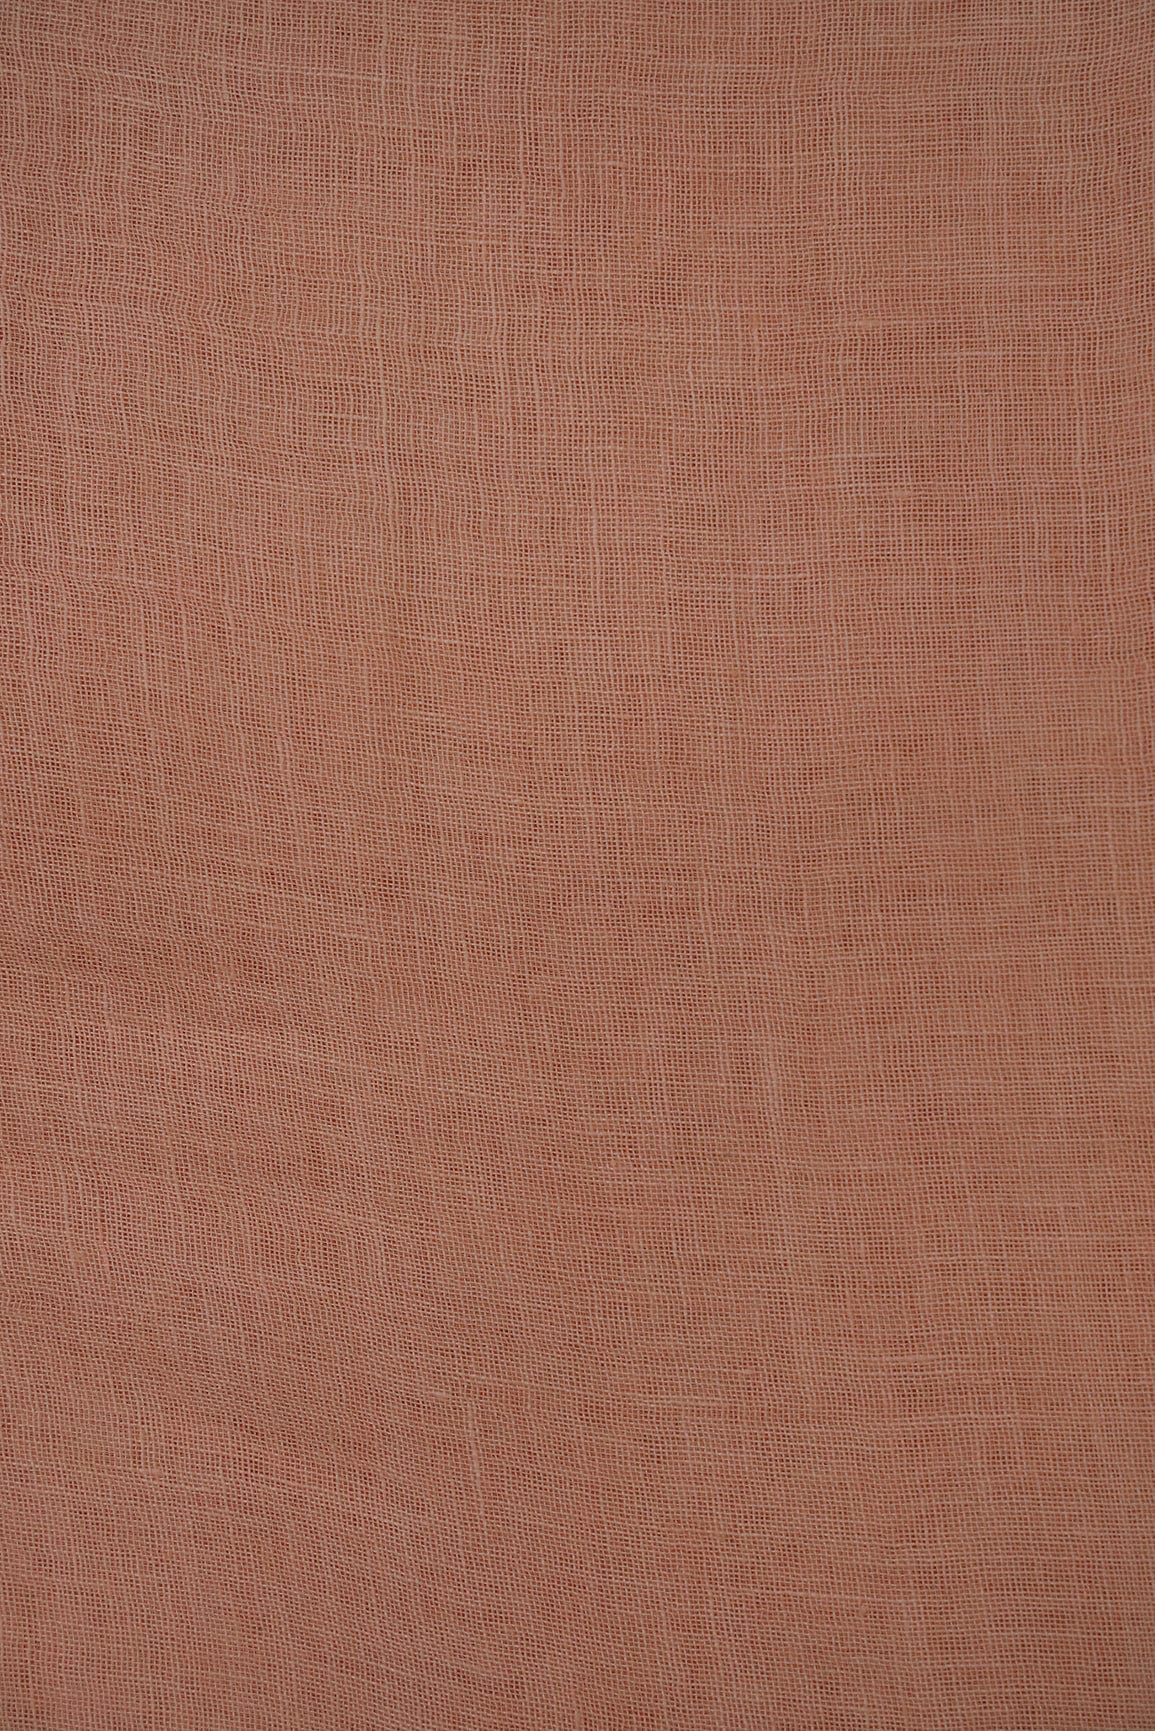 doeraa Plain Fabrics Peach Linen by Cotton Fabric